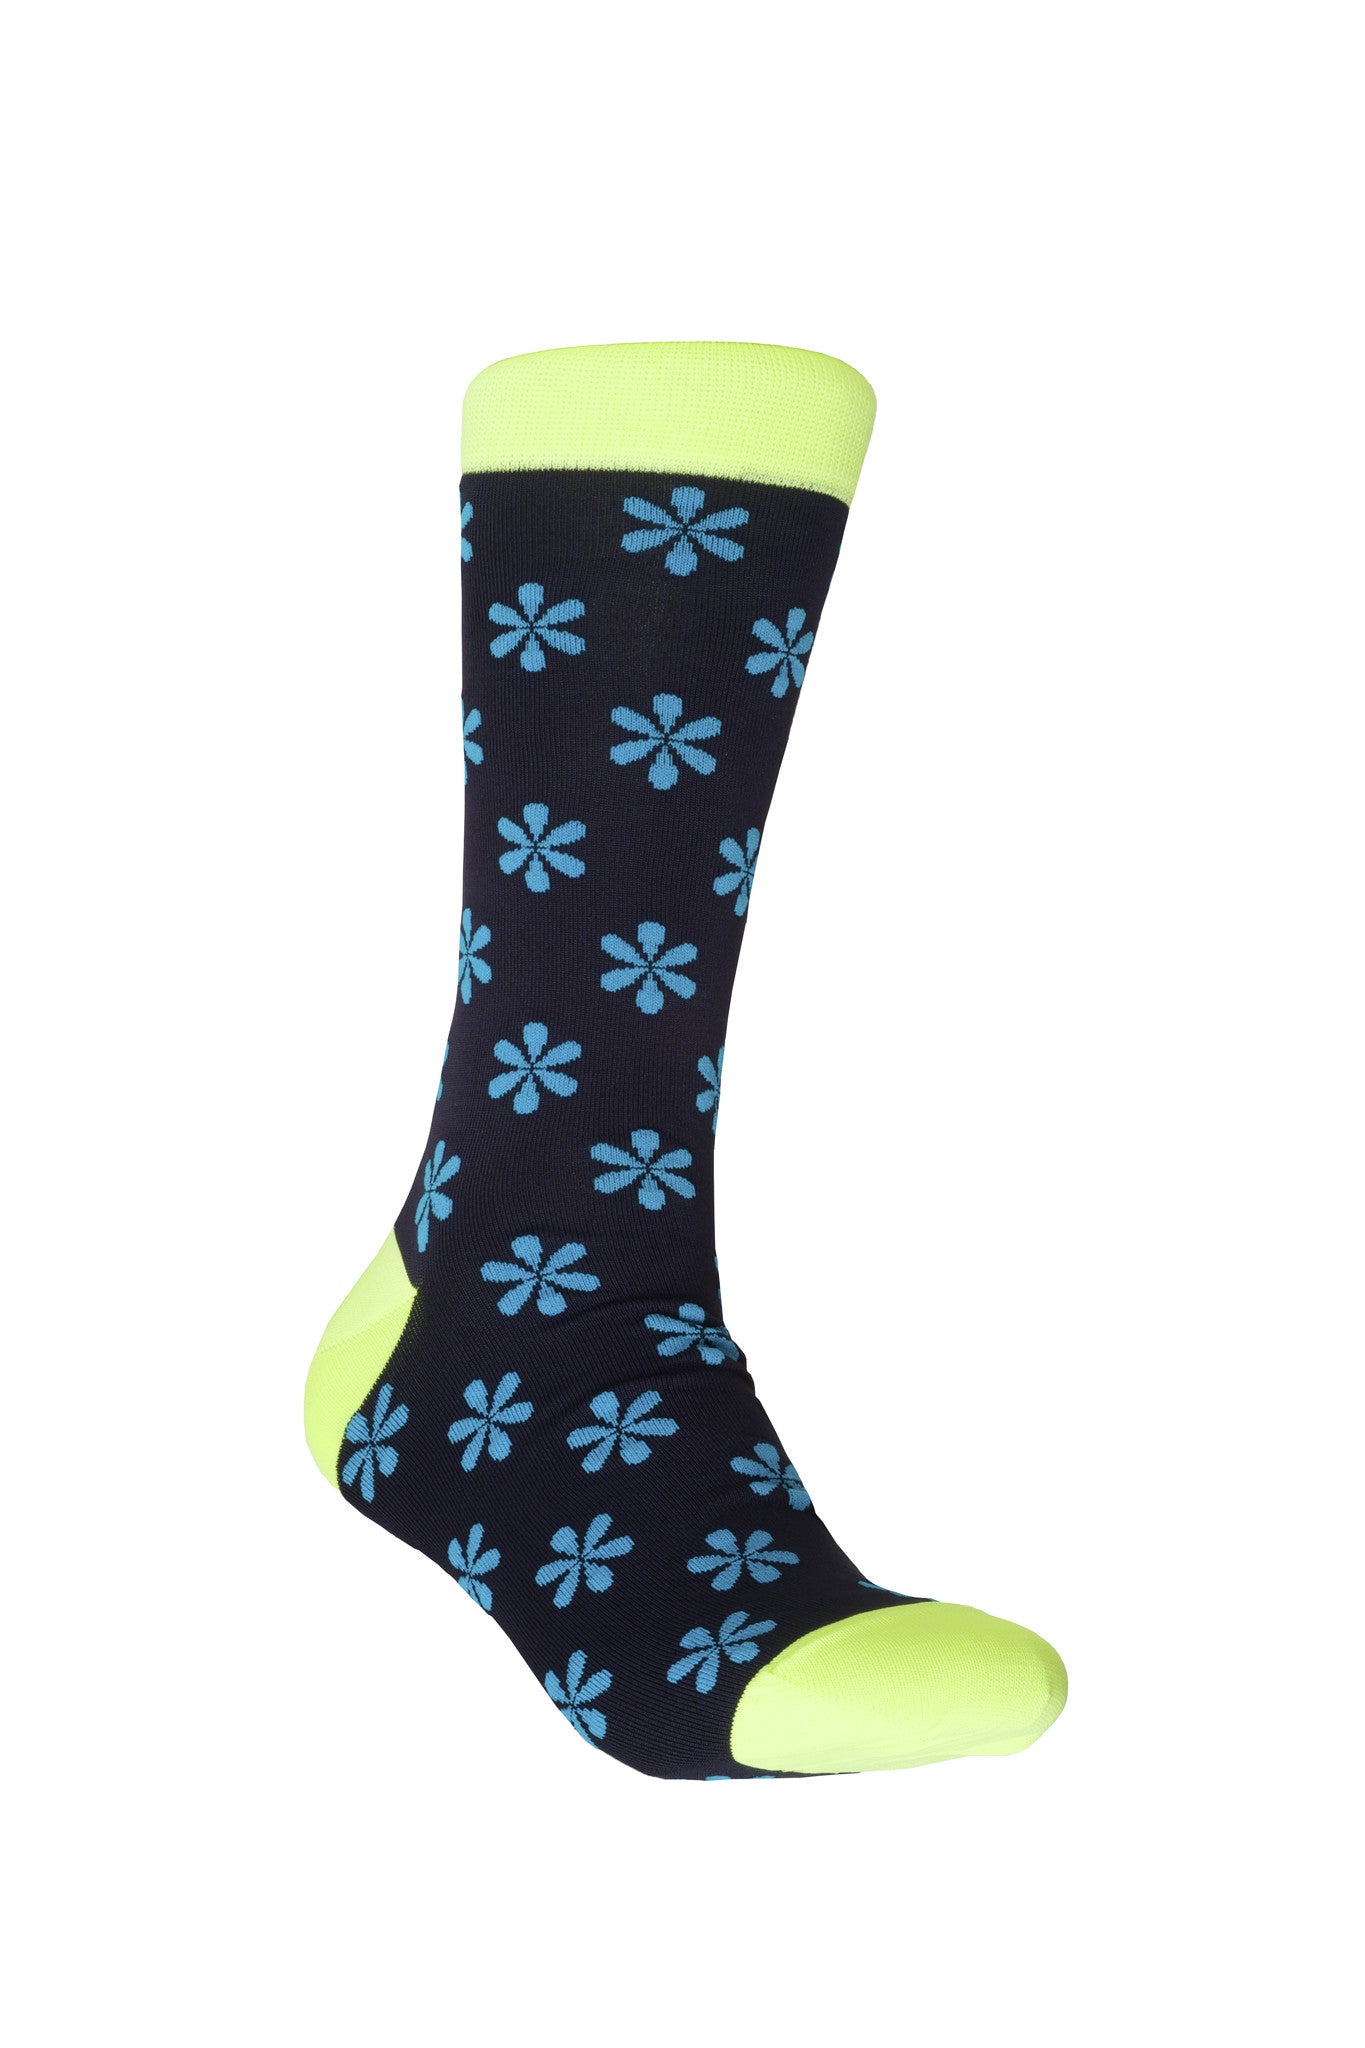 Giraffecool-Giraffe-Cool-DarkBlue-Yellow-Blue-Flowers-Microfiber-Fashion-Socks-Front